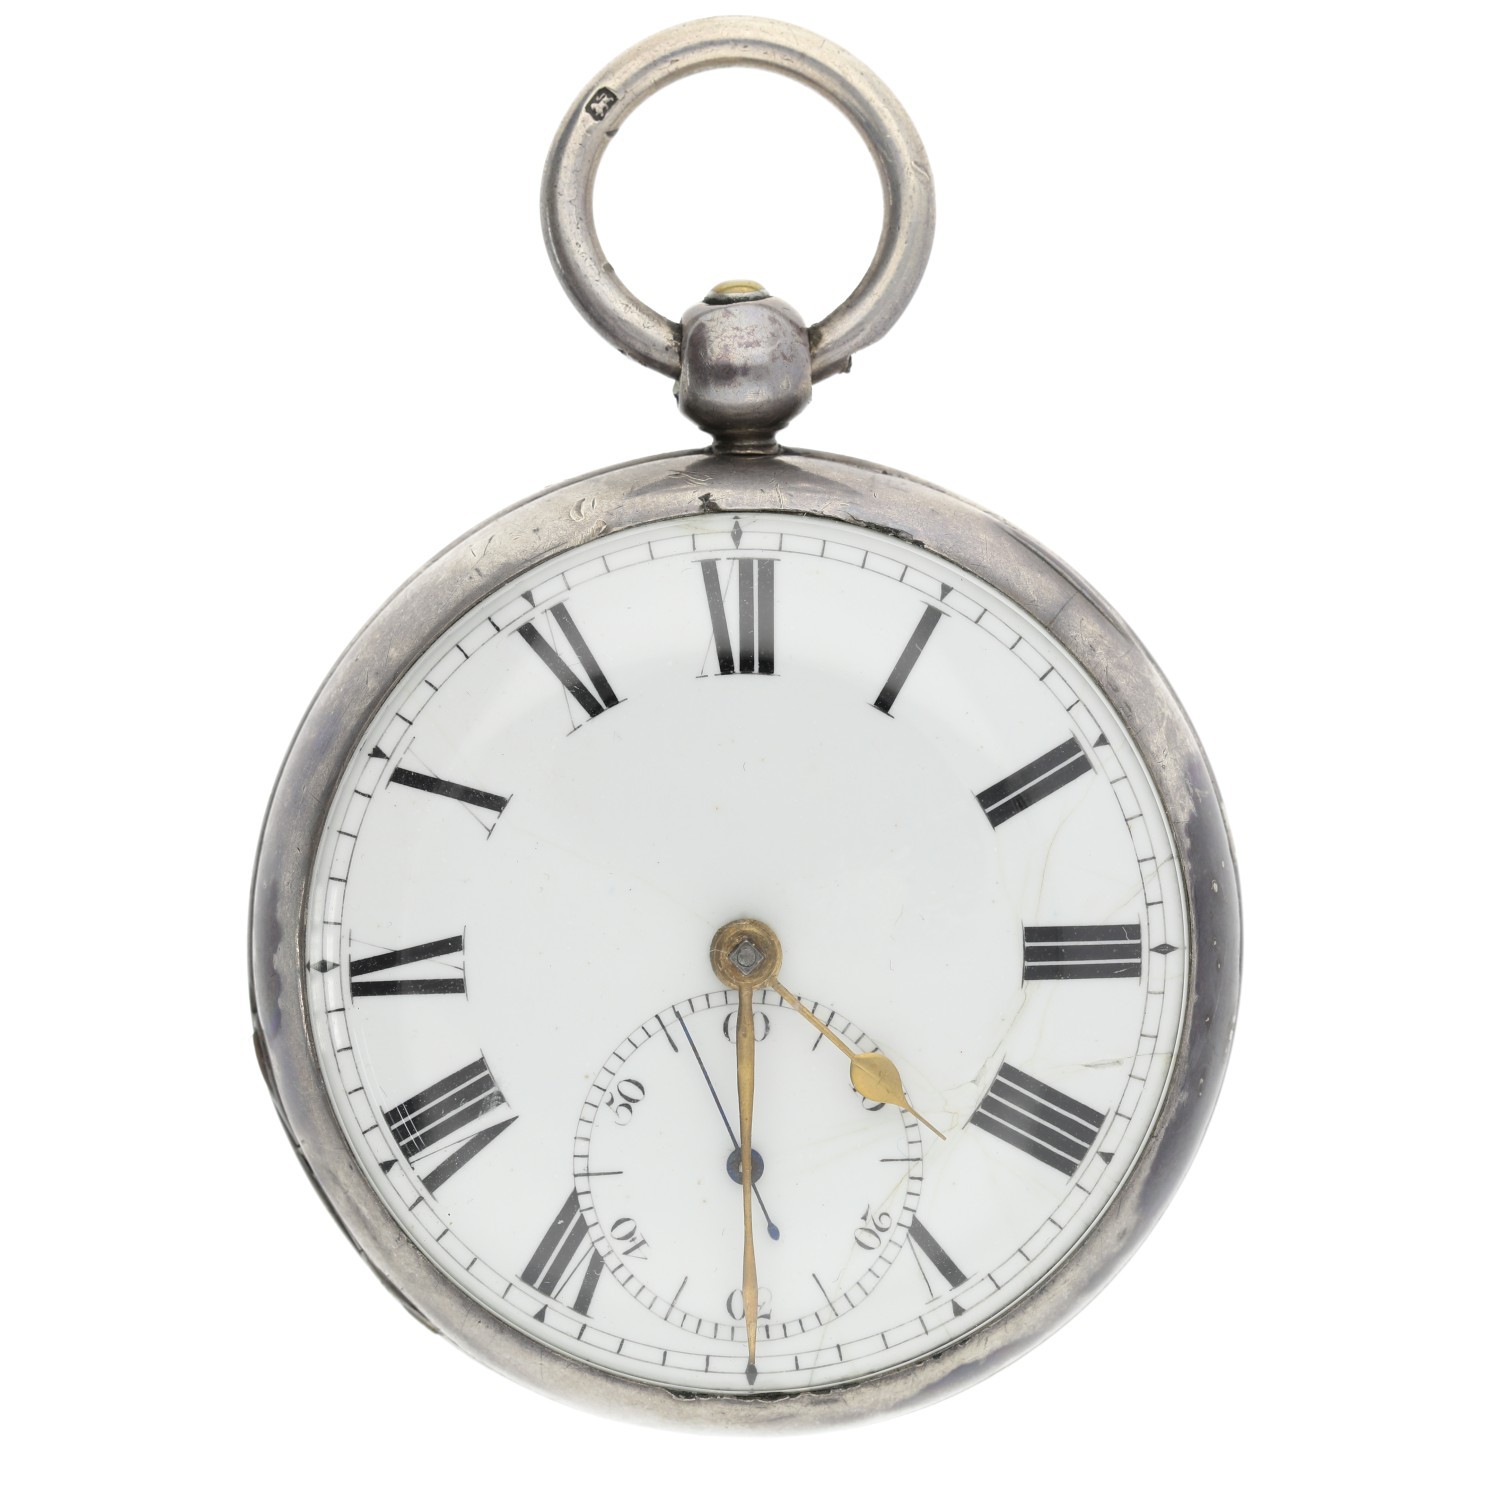 Grayhurst Harvey & Co., London - William IV silver cylinder pocket watch, London 1834, signed - Image 2 of 4